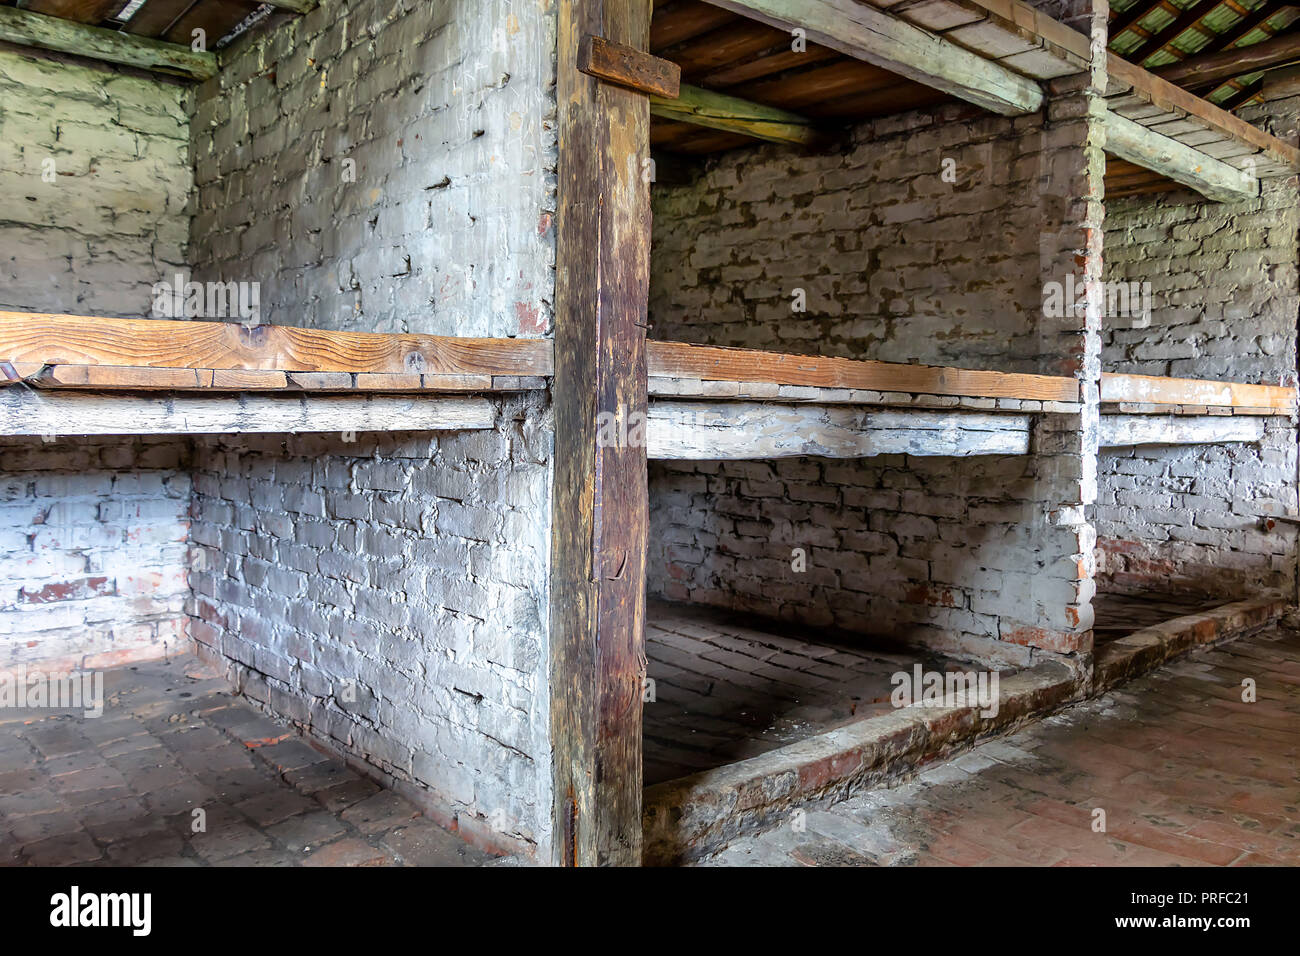 Prisoner's beds, bunks inside barrack in Auschwitz Birkenau. Nazi concentration camp Auschwitz II, Auschwitz Birkenau, Poland Stock Photo